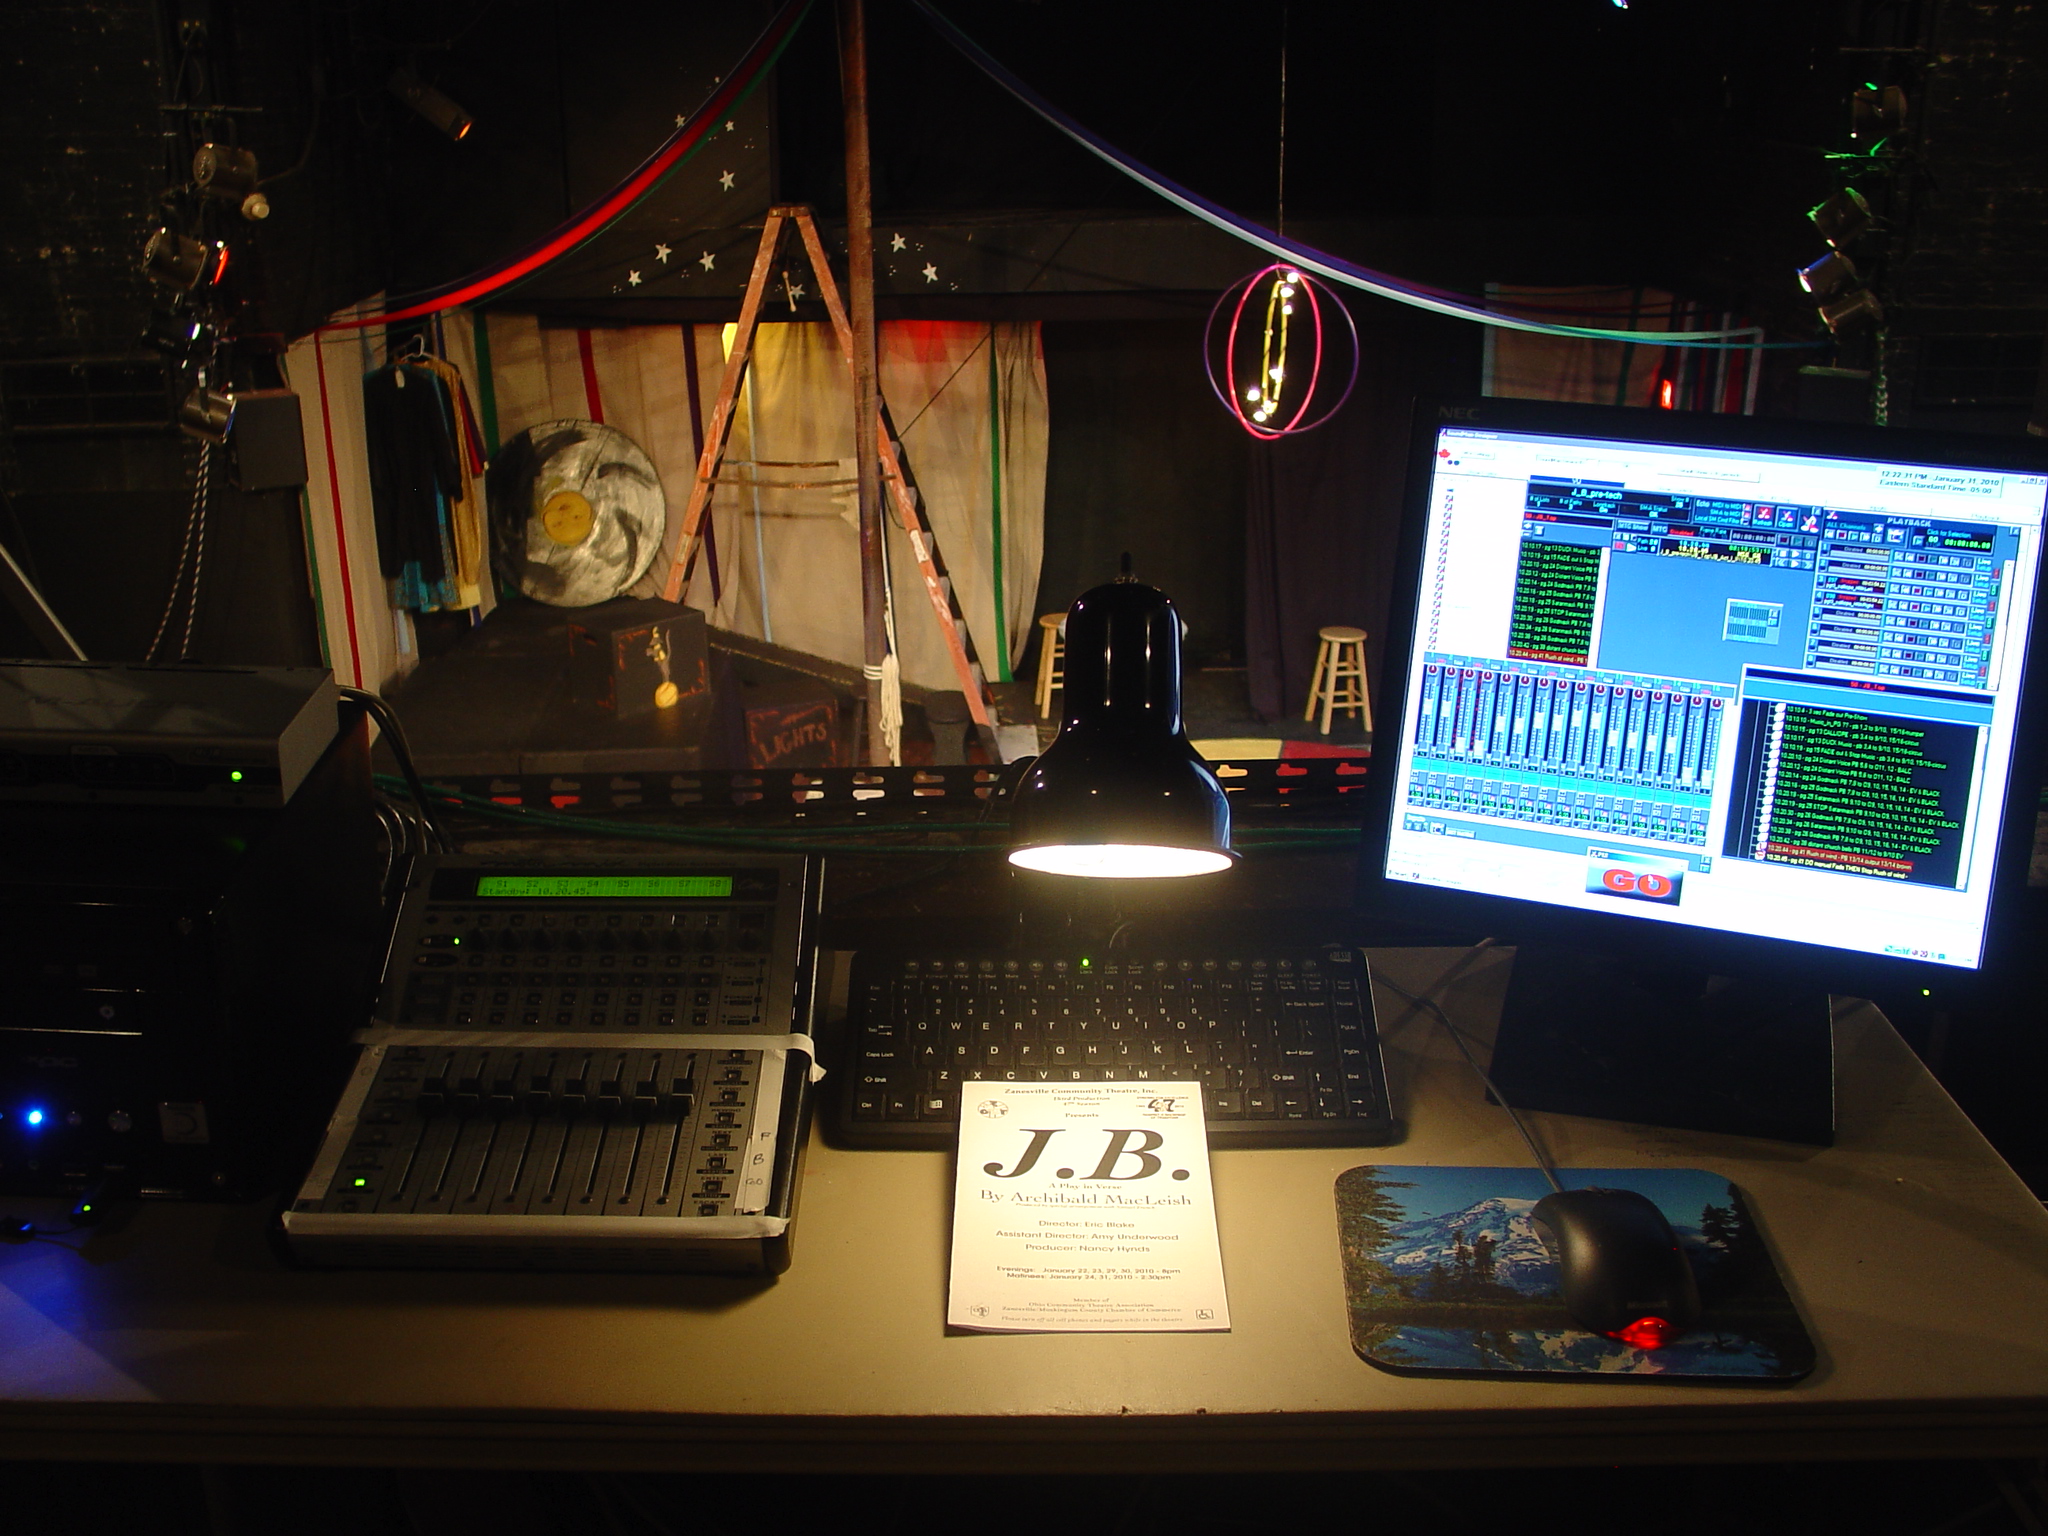 Theatre Sound Design, Show Control & Audio Engine Software